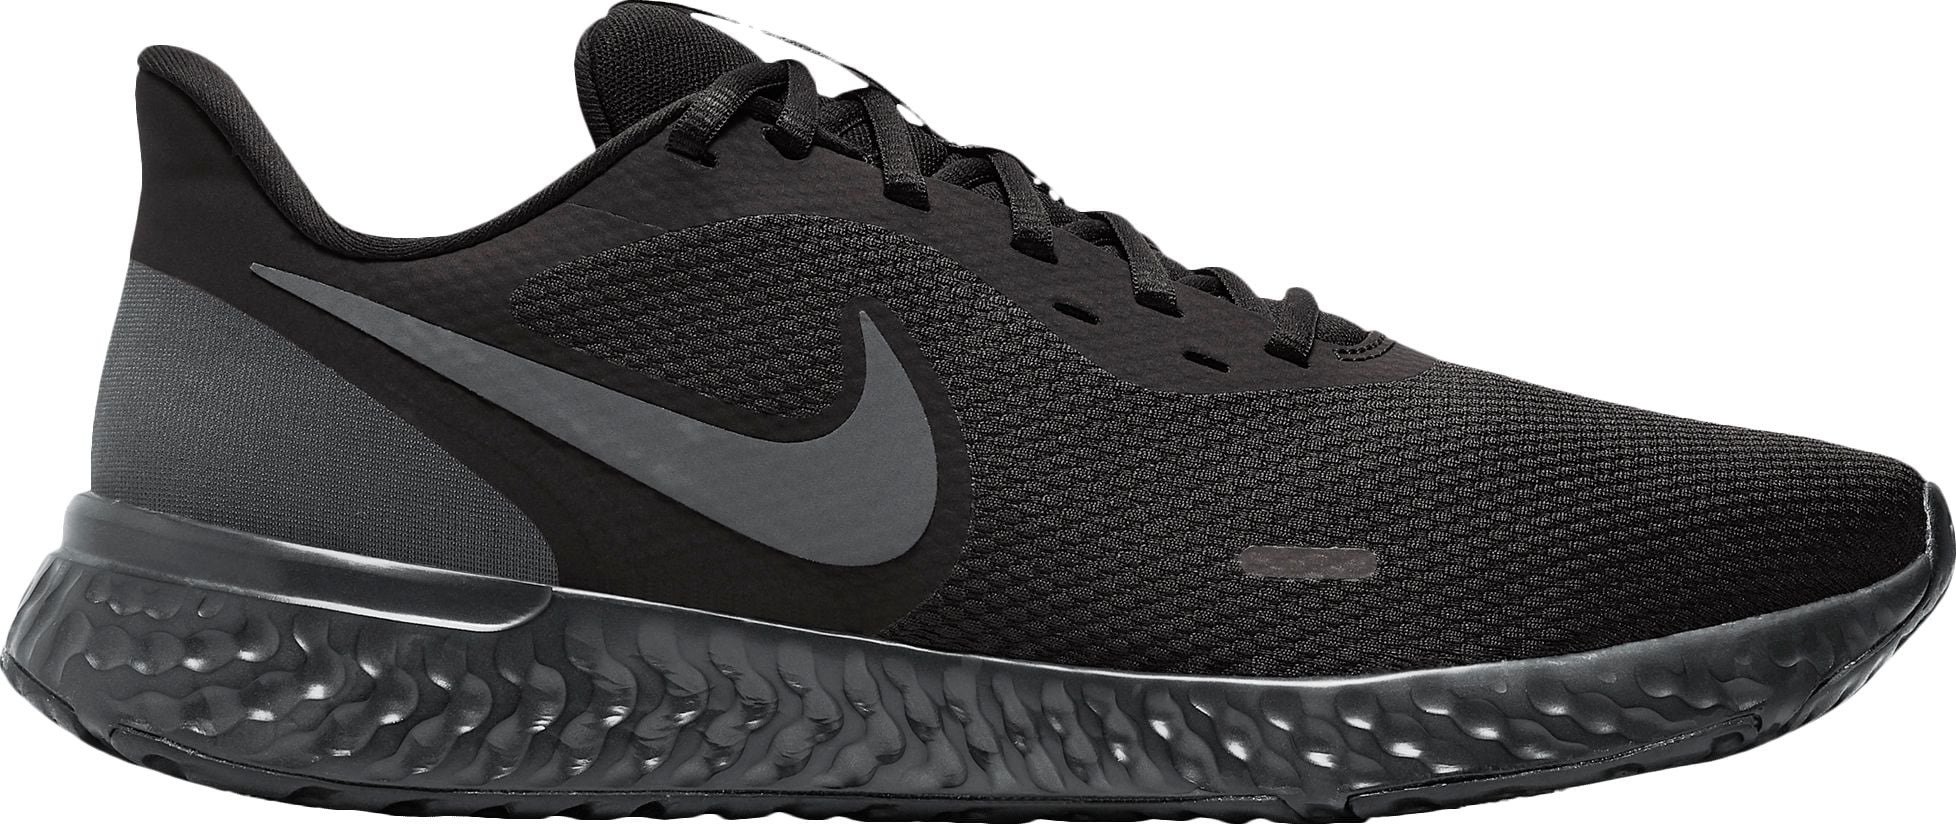 Nike - Nike Men's Revolution 5 Running Shoes - Walmart.com - Walmart.com